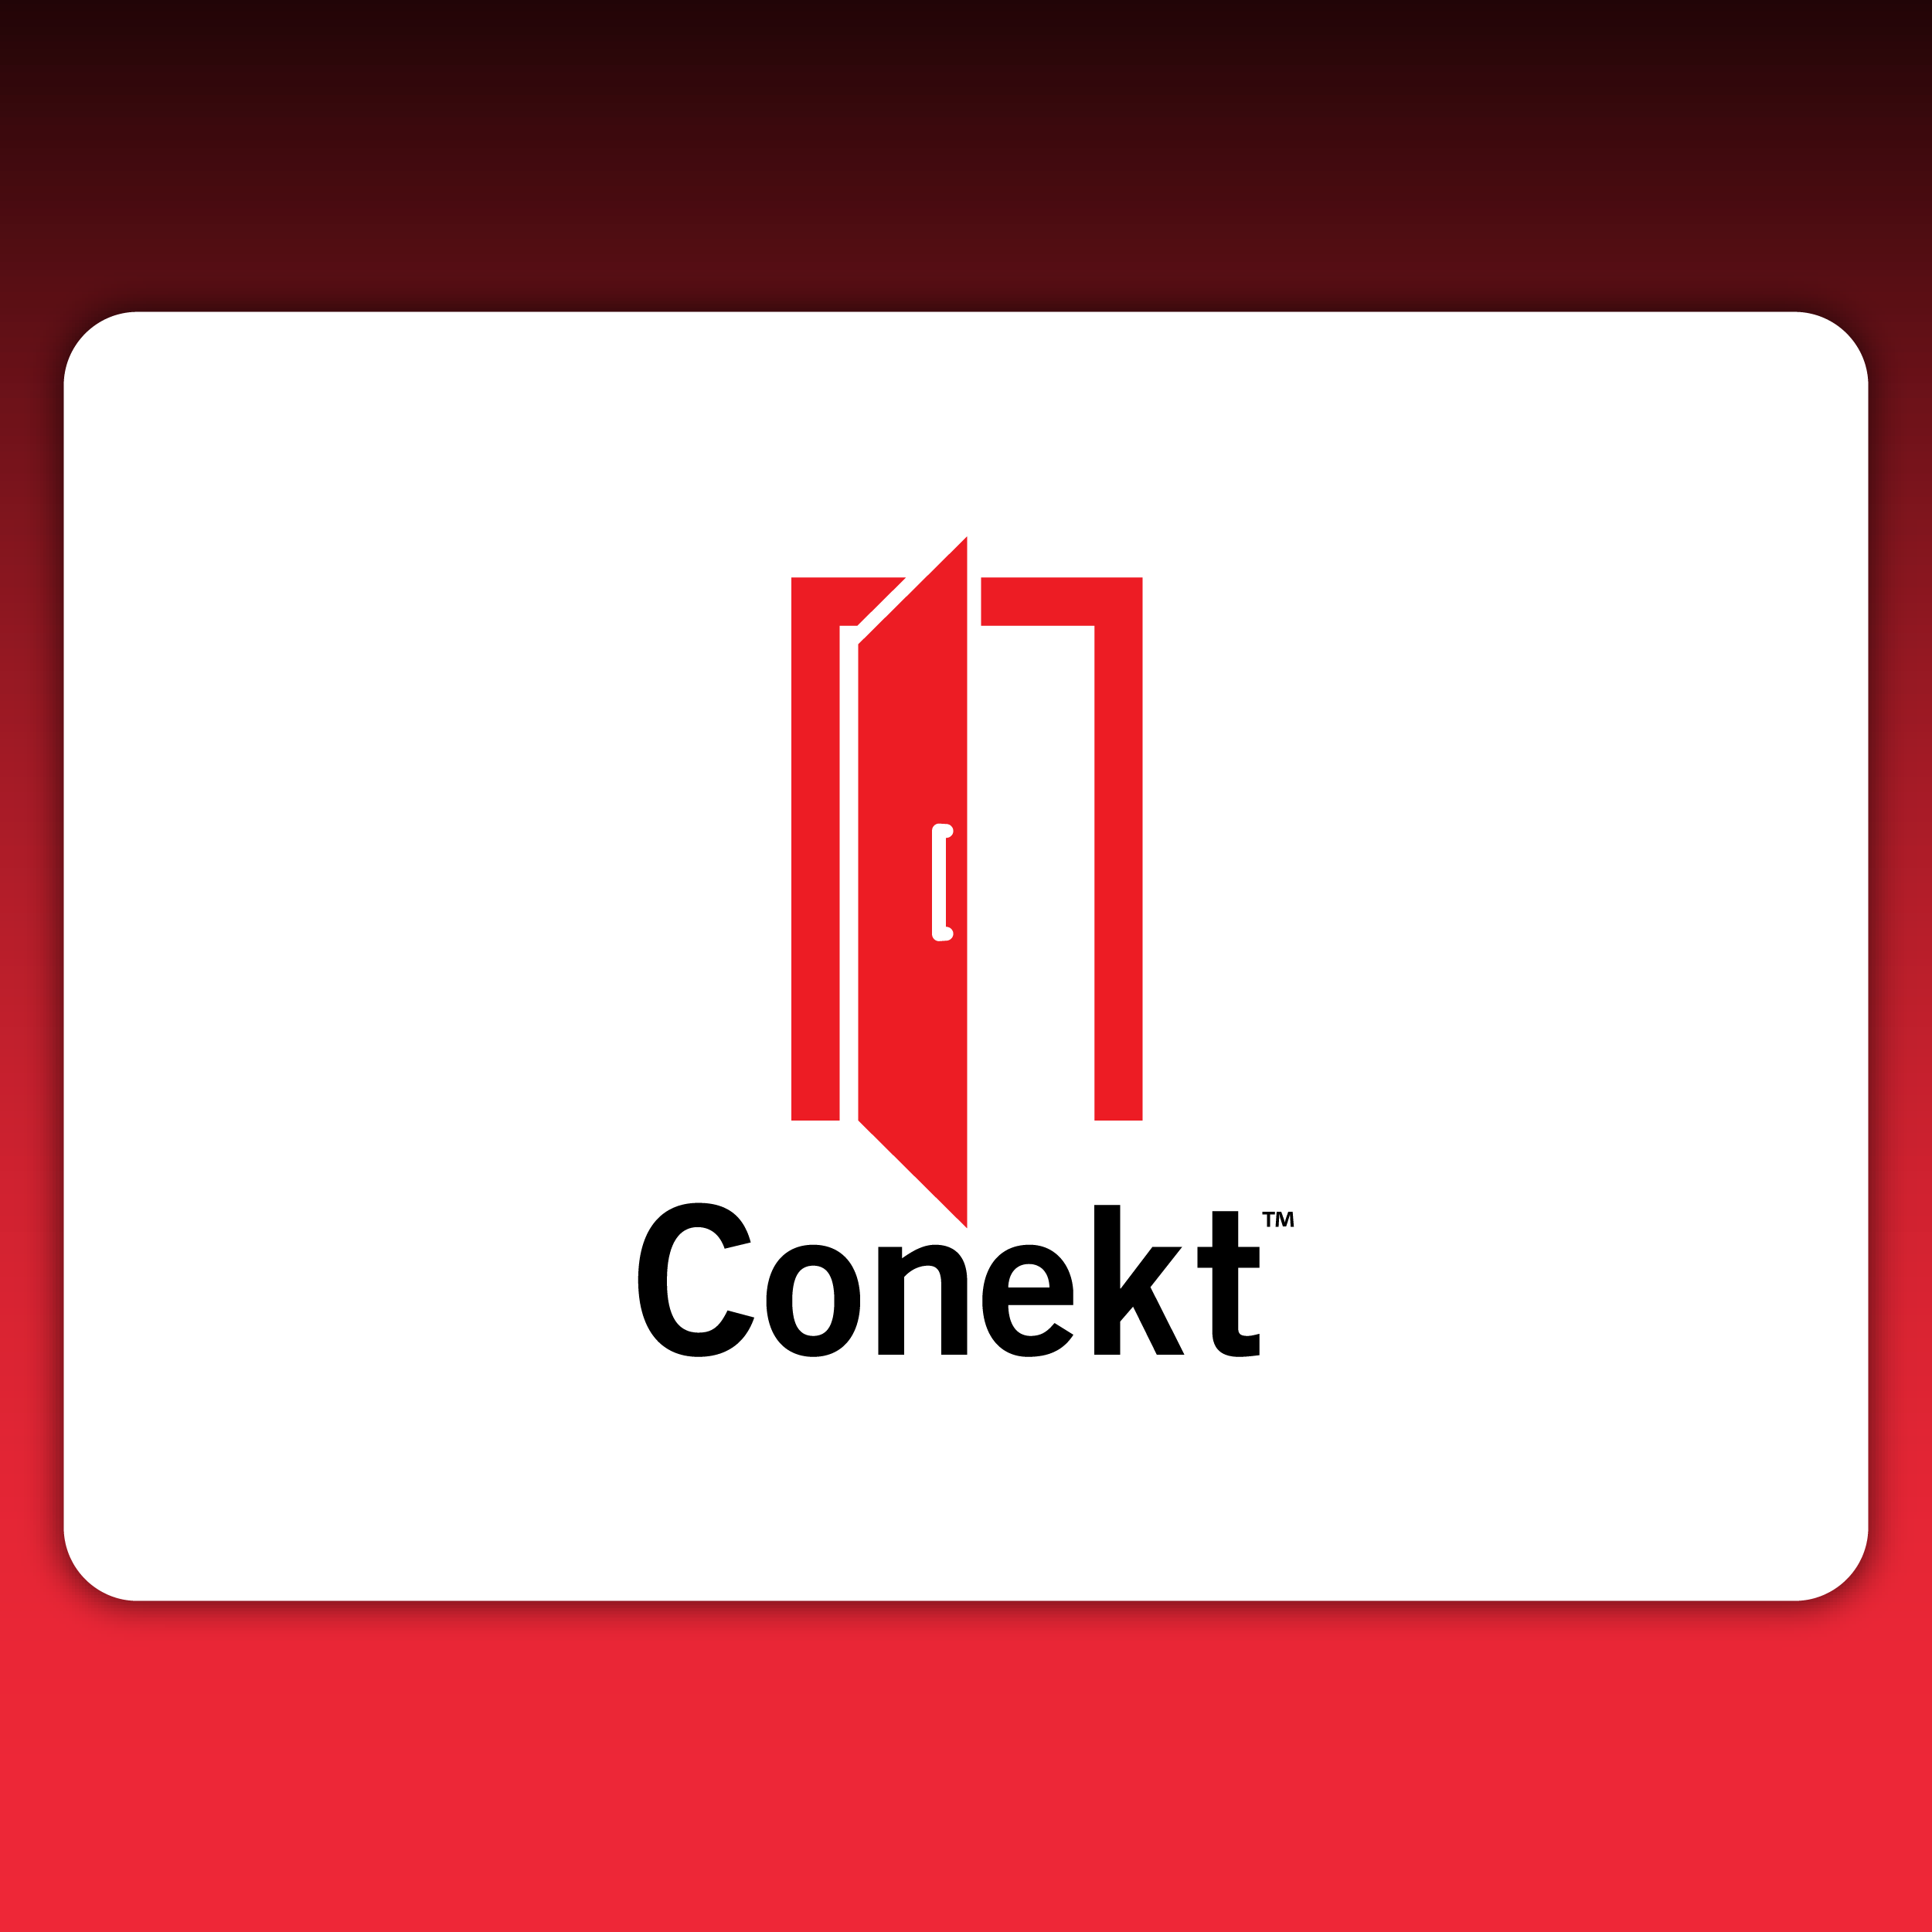 Conekt Mobile Smartphone Access Credential